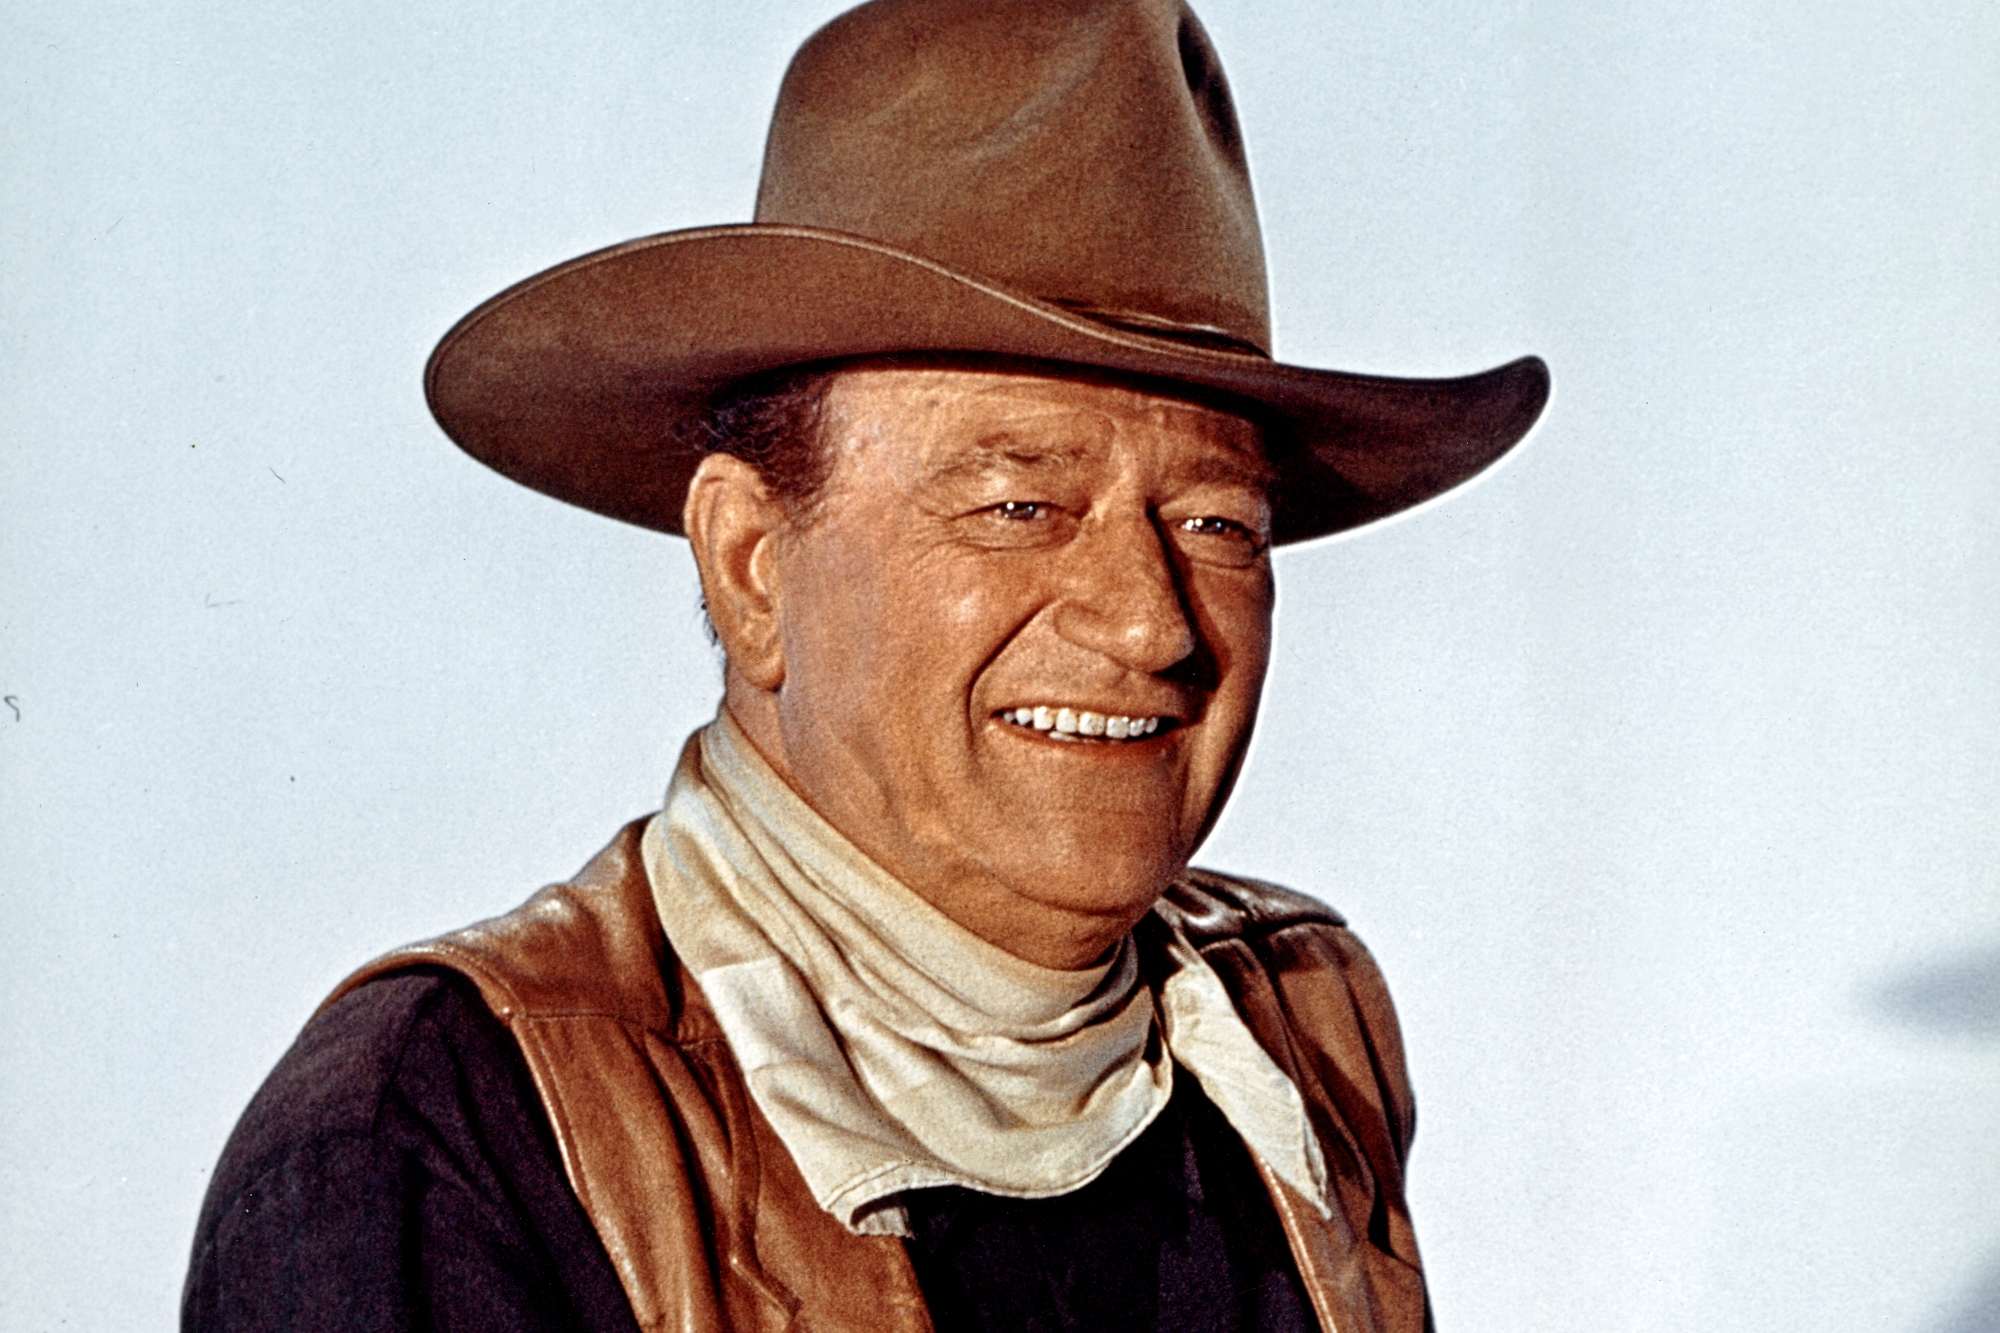 John Wayne starring in Western movies smiling, wearing a cowboy costume